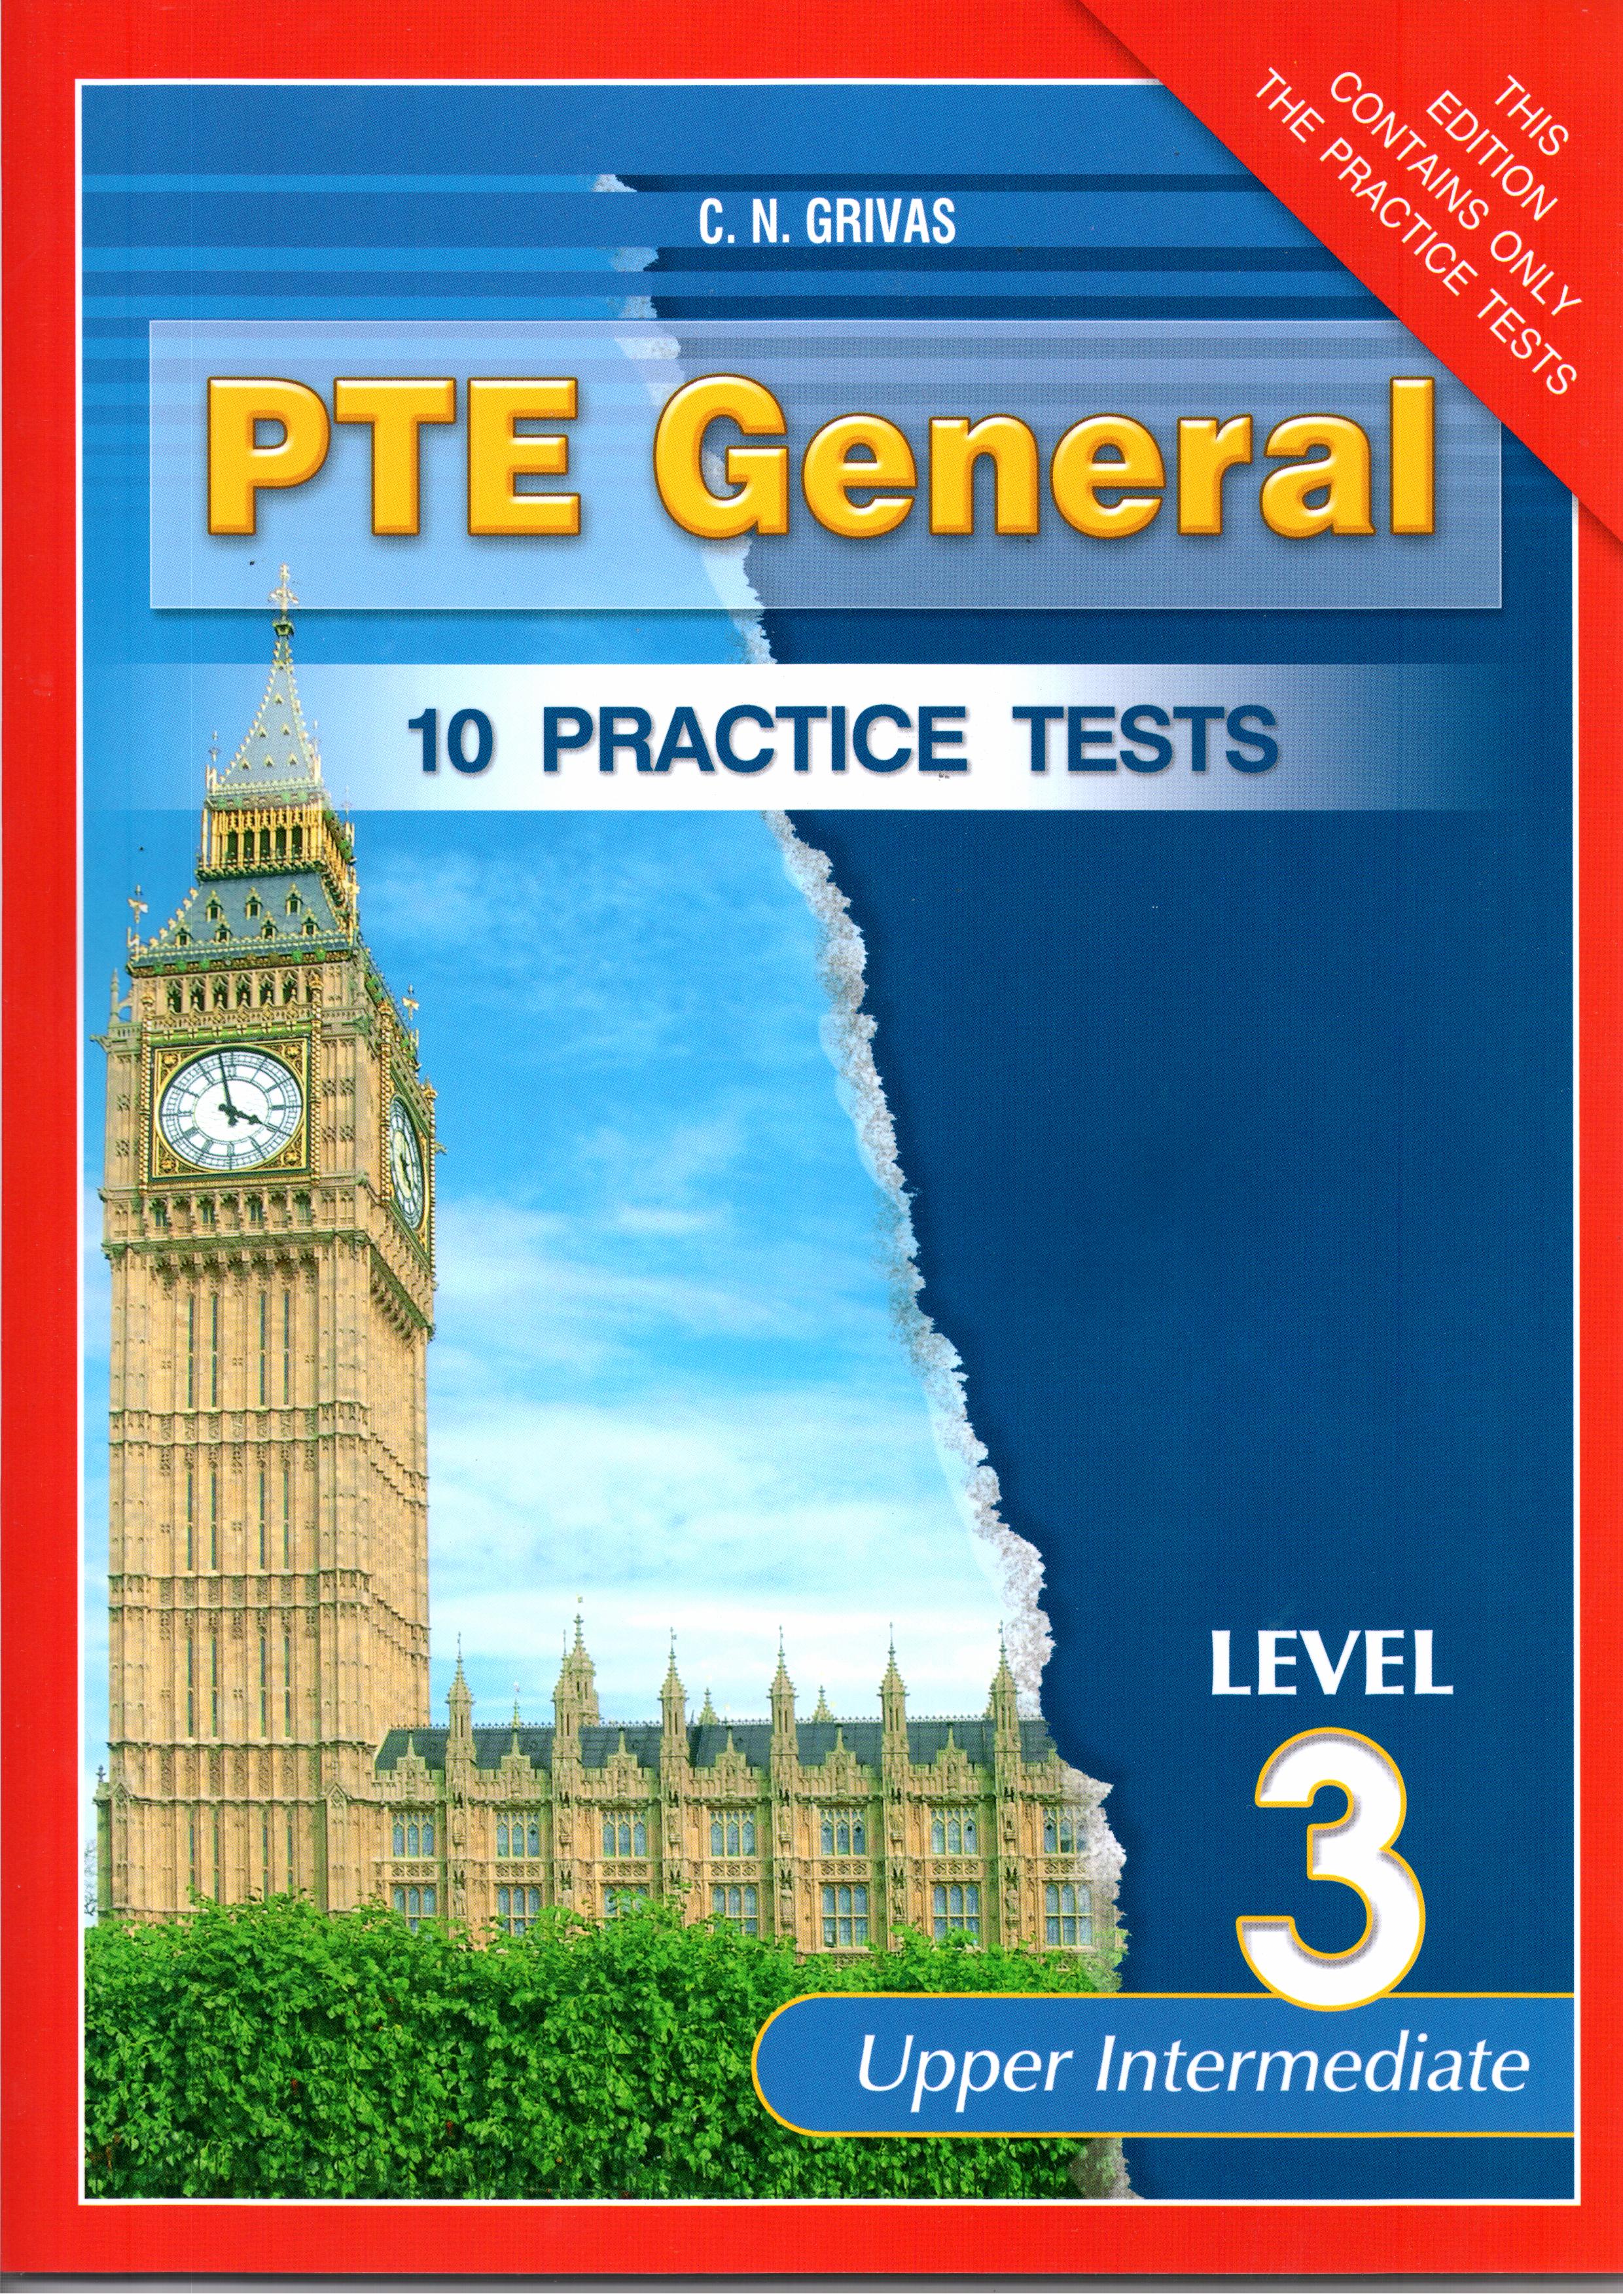 PTE GENERAL LEVEL 3 10 PRACTICE TESTS